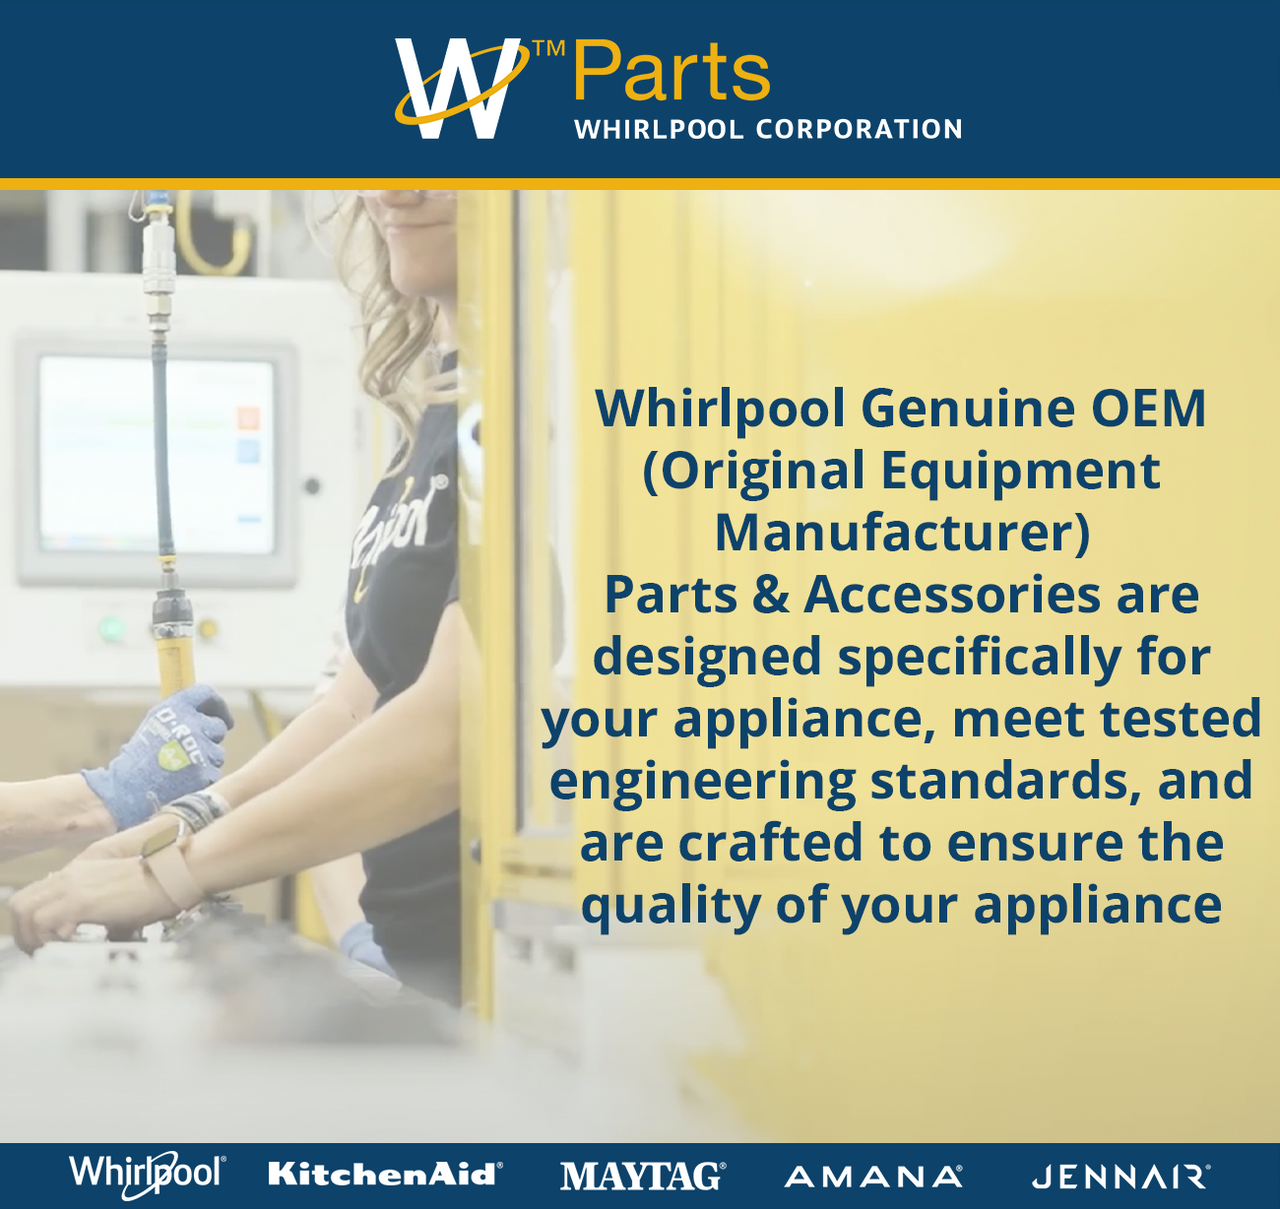 Whirlpool W10250743RB - Washer Detergent Dispenser - Whirlpool Genuine Part Badge